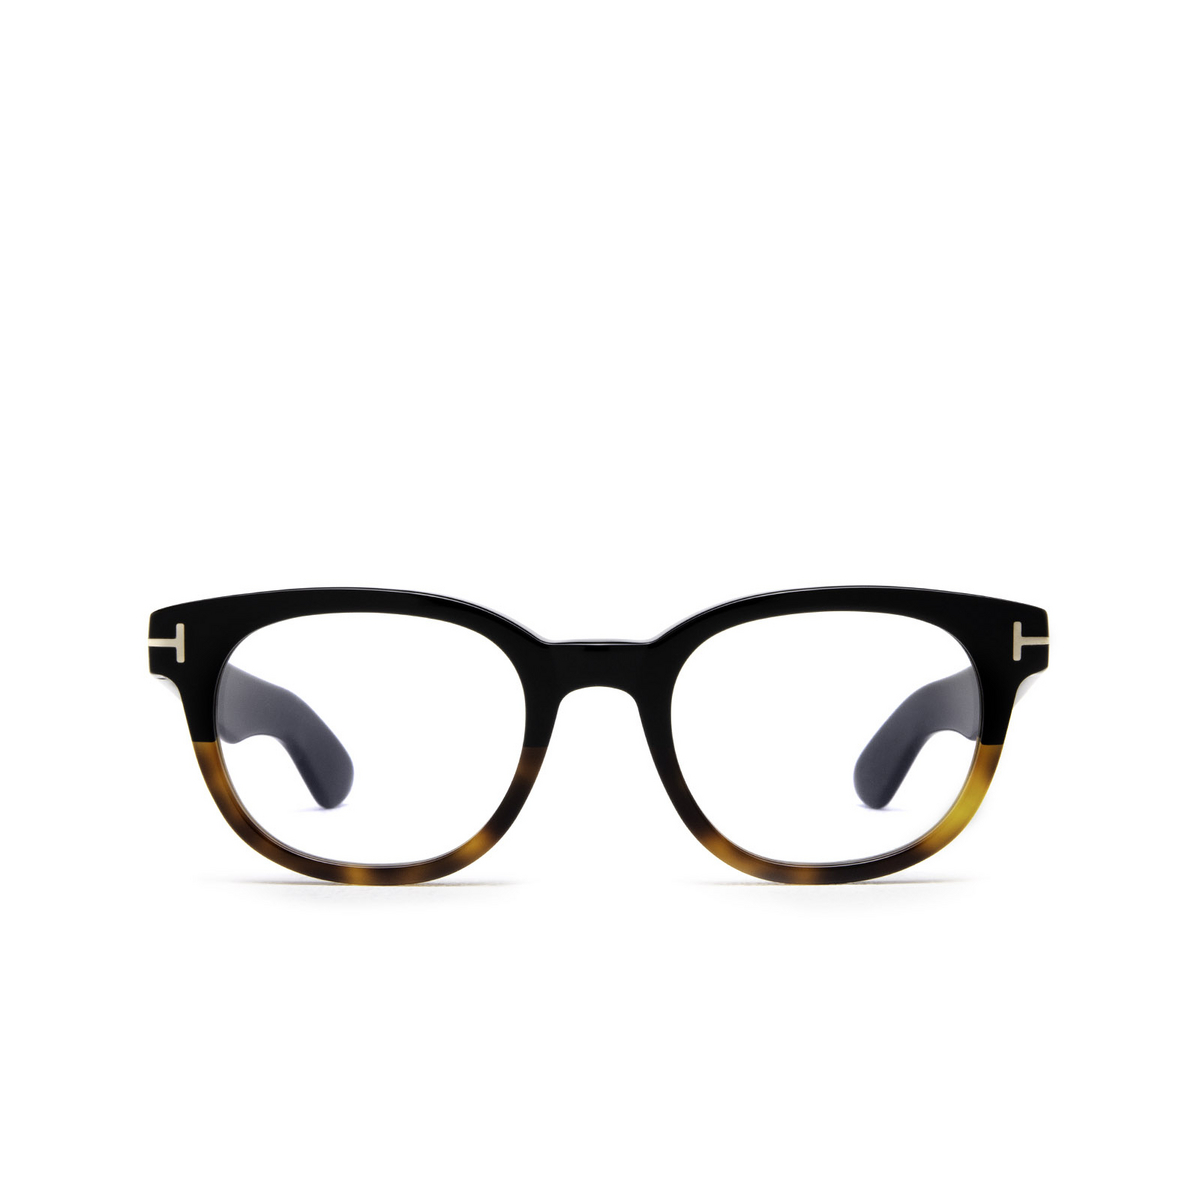 Tom Ford® Square Eyeglasses: FT5807-B color Black & Havana 005 - front view.